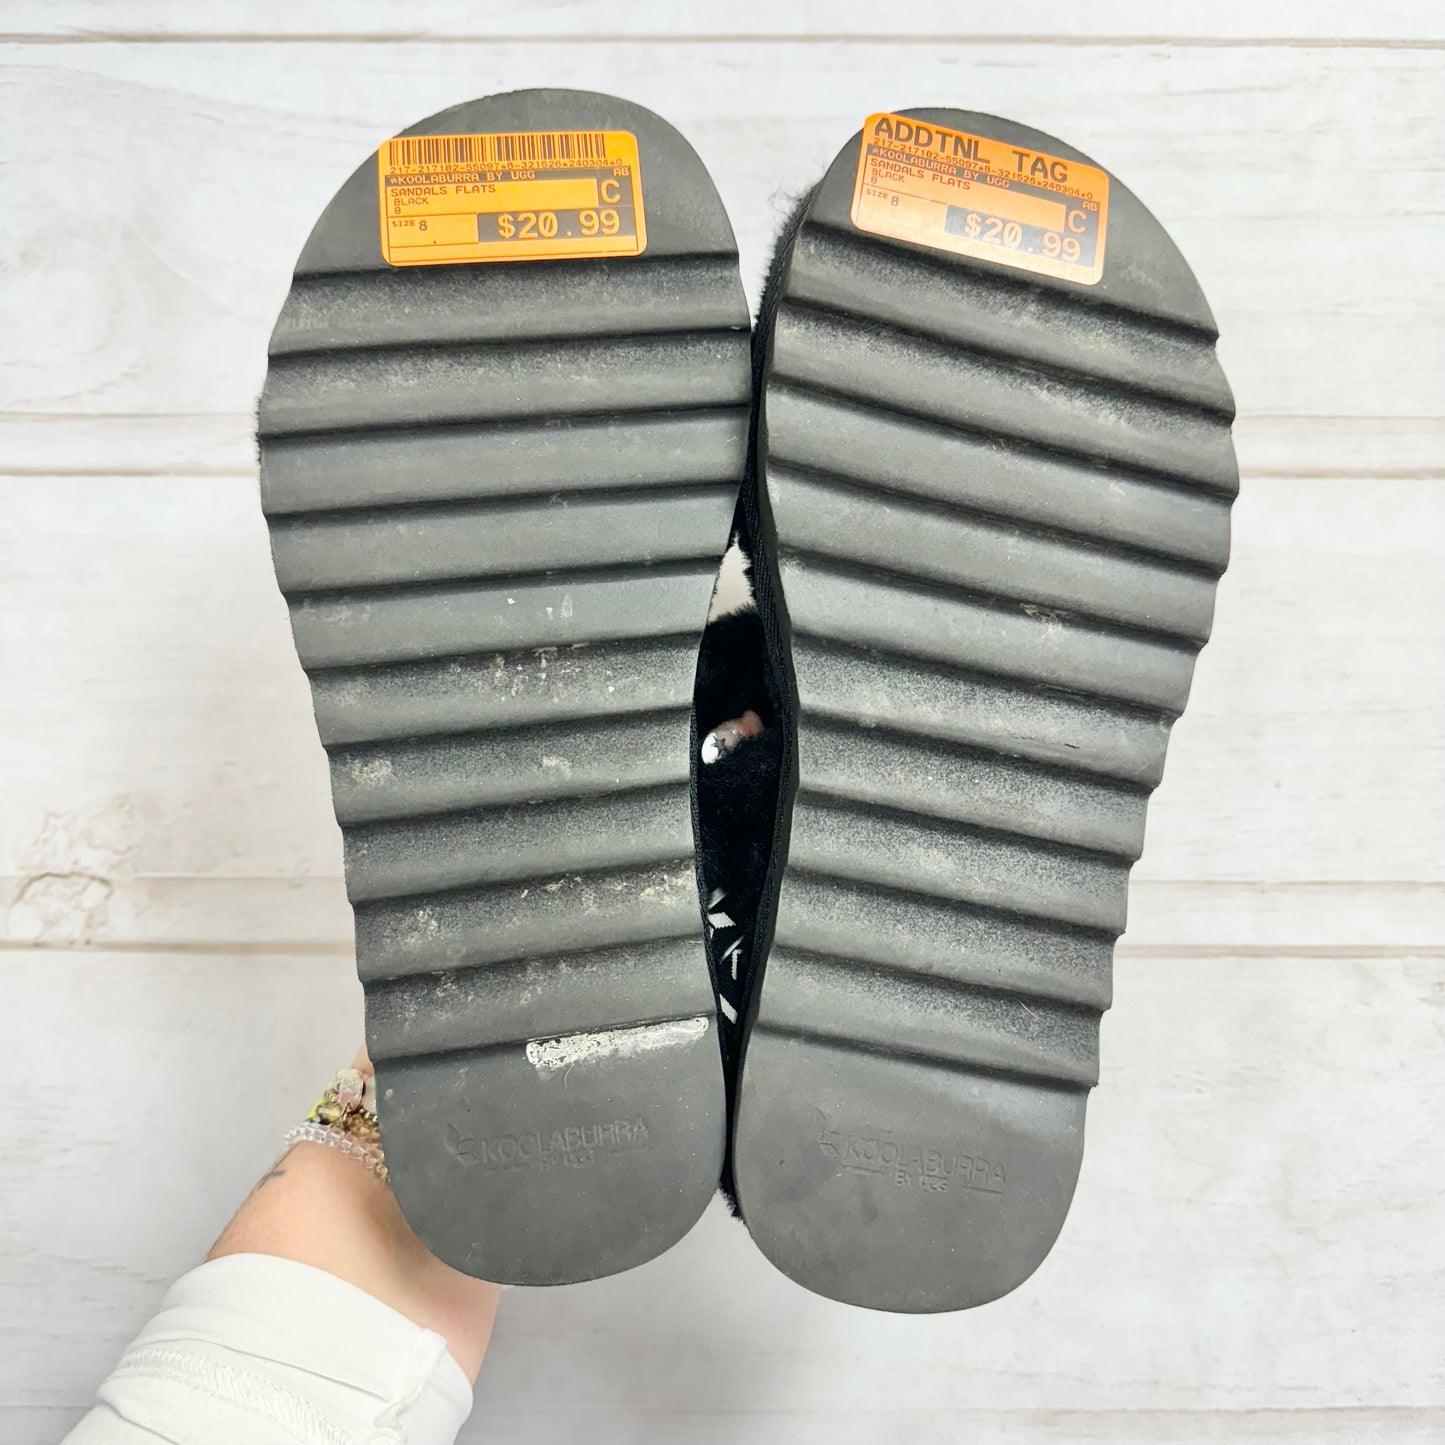 Sandals Flats By Koolaburra By Ugg  Size: 8